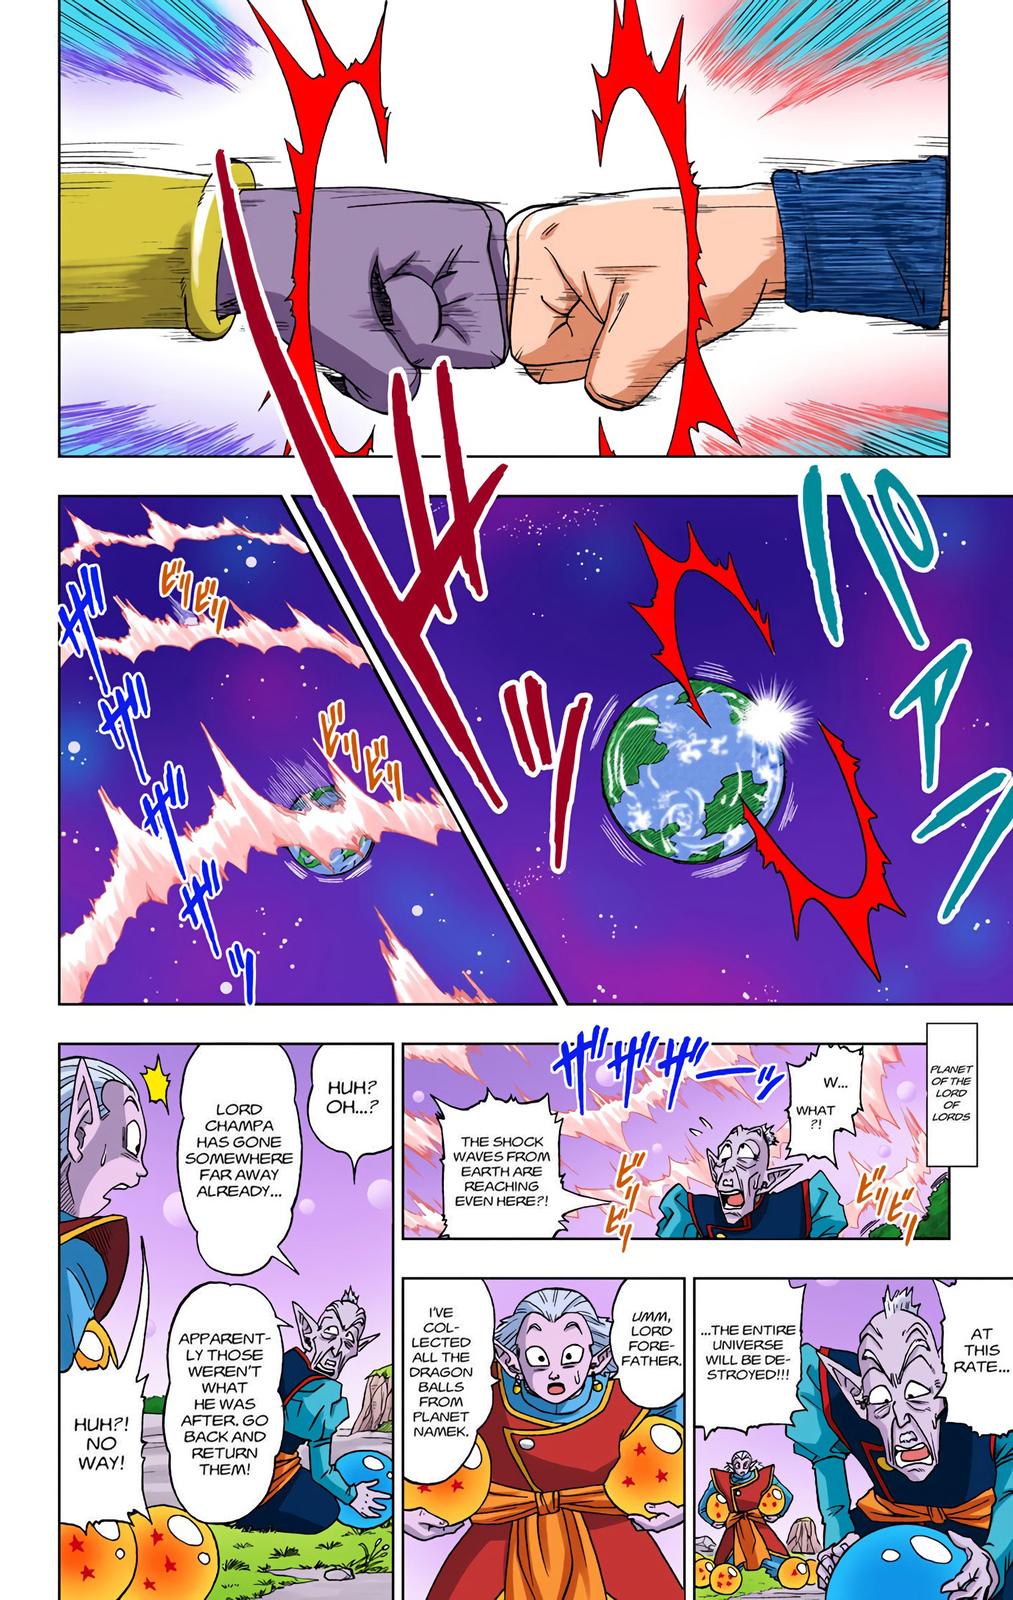 If Xeno Goku got Super Saiyan 5, could he take down Alien X? - Quora